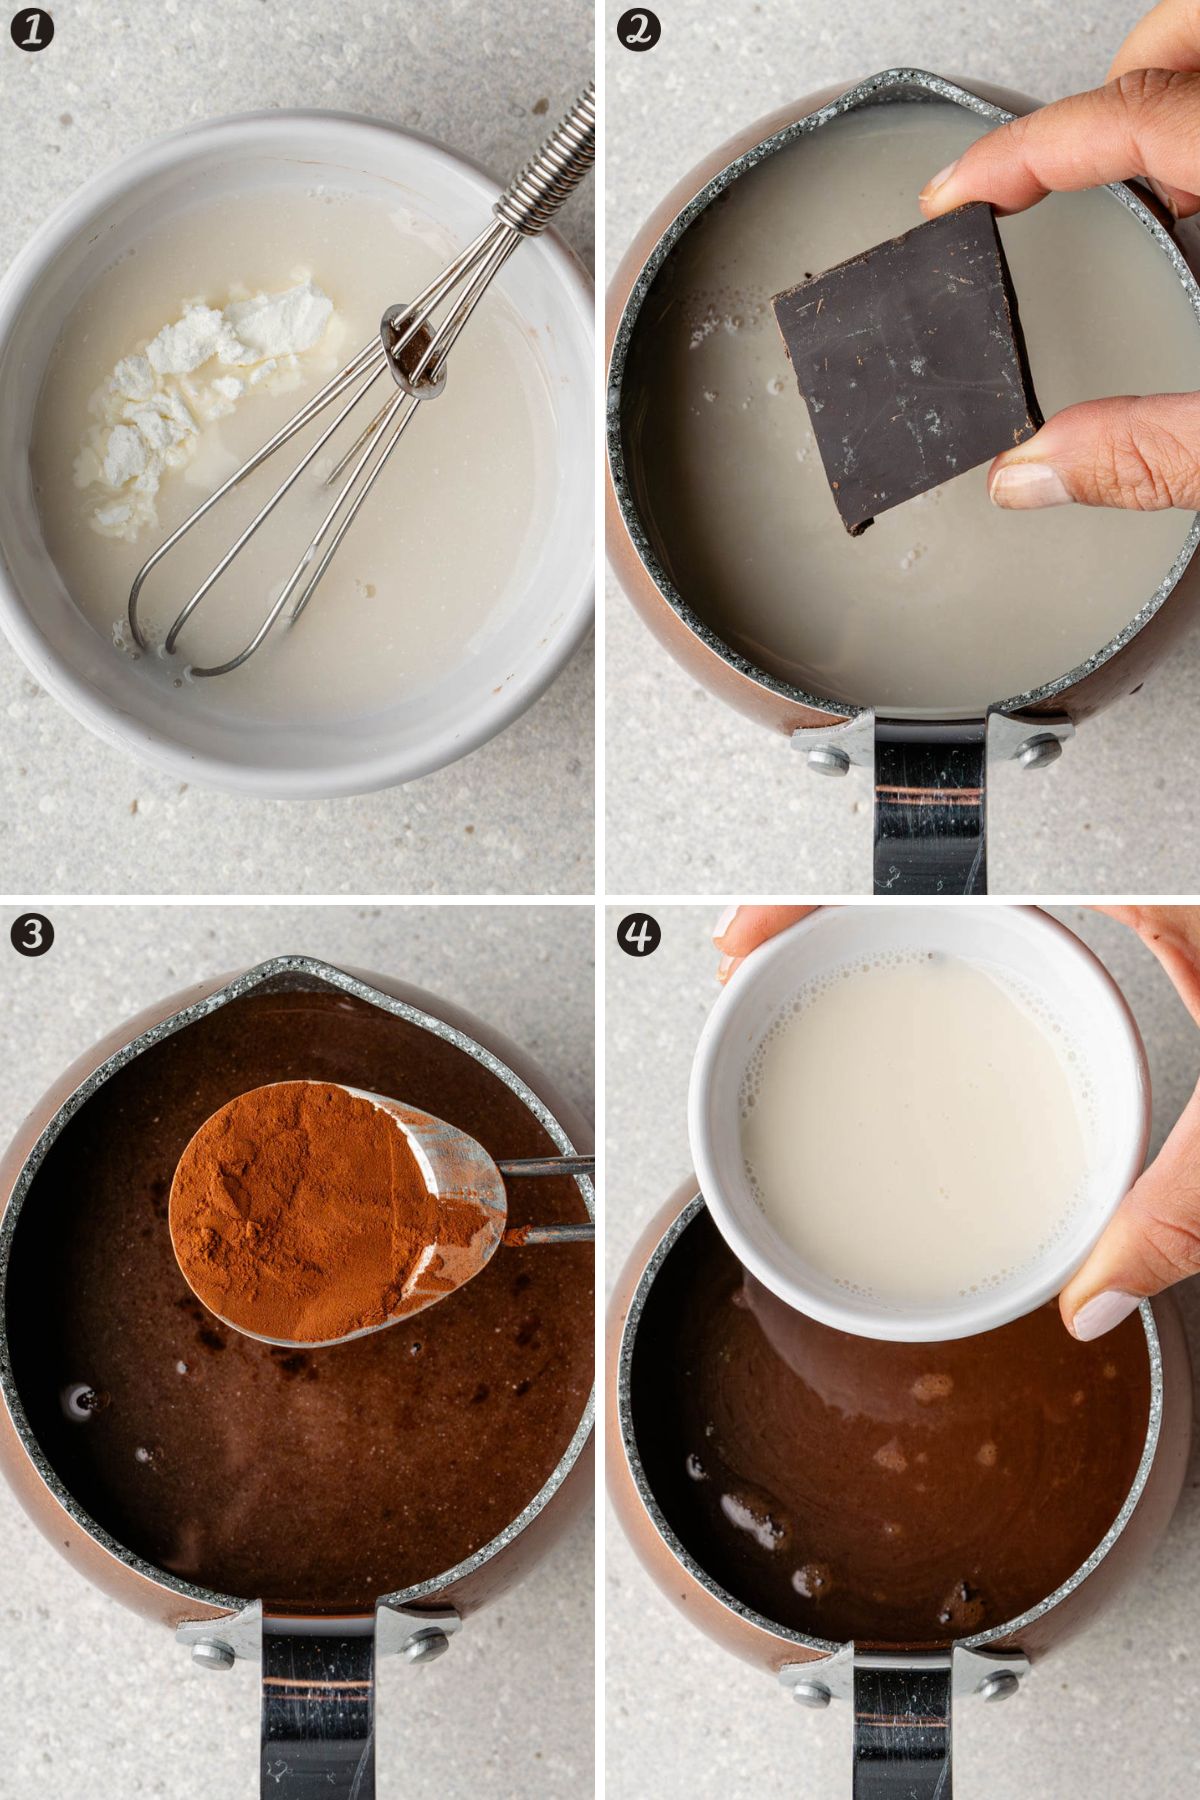 Steps on how to make Italian Hot Chocolate